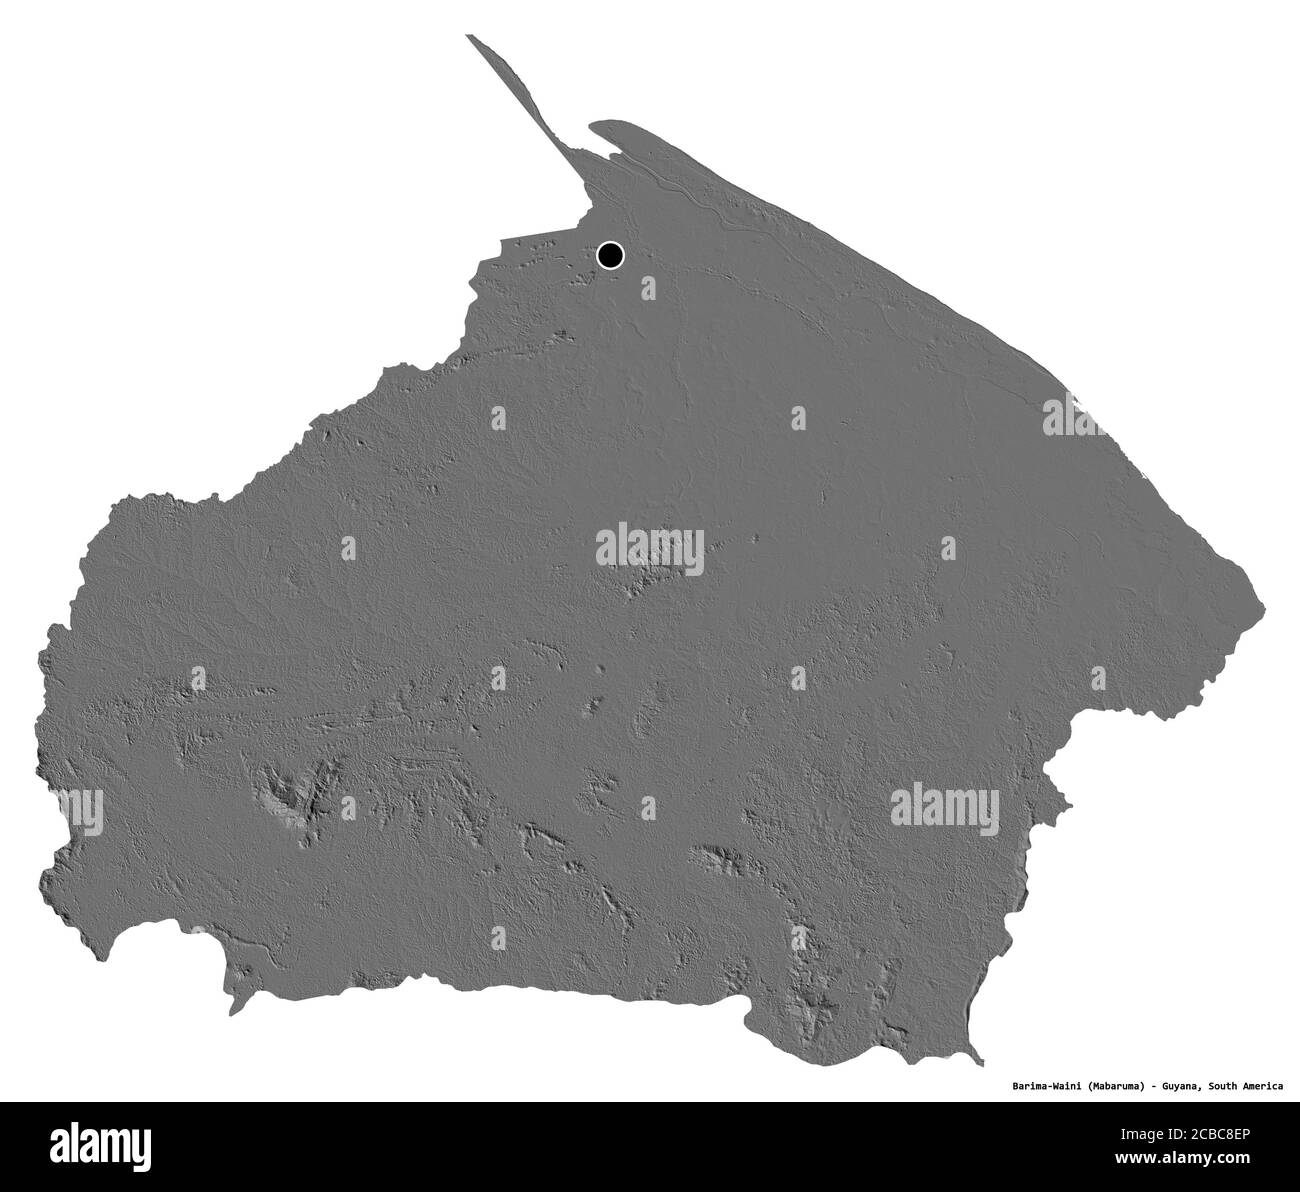 Shape of Barima-Waini, region of Guyana, with its capital isolated on white background. Bilevel elevation map. 3D rendering Stock Photo